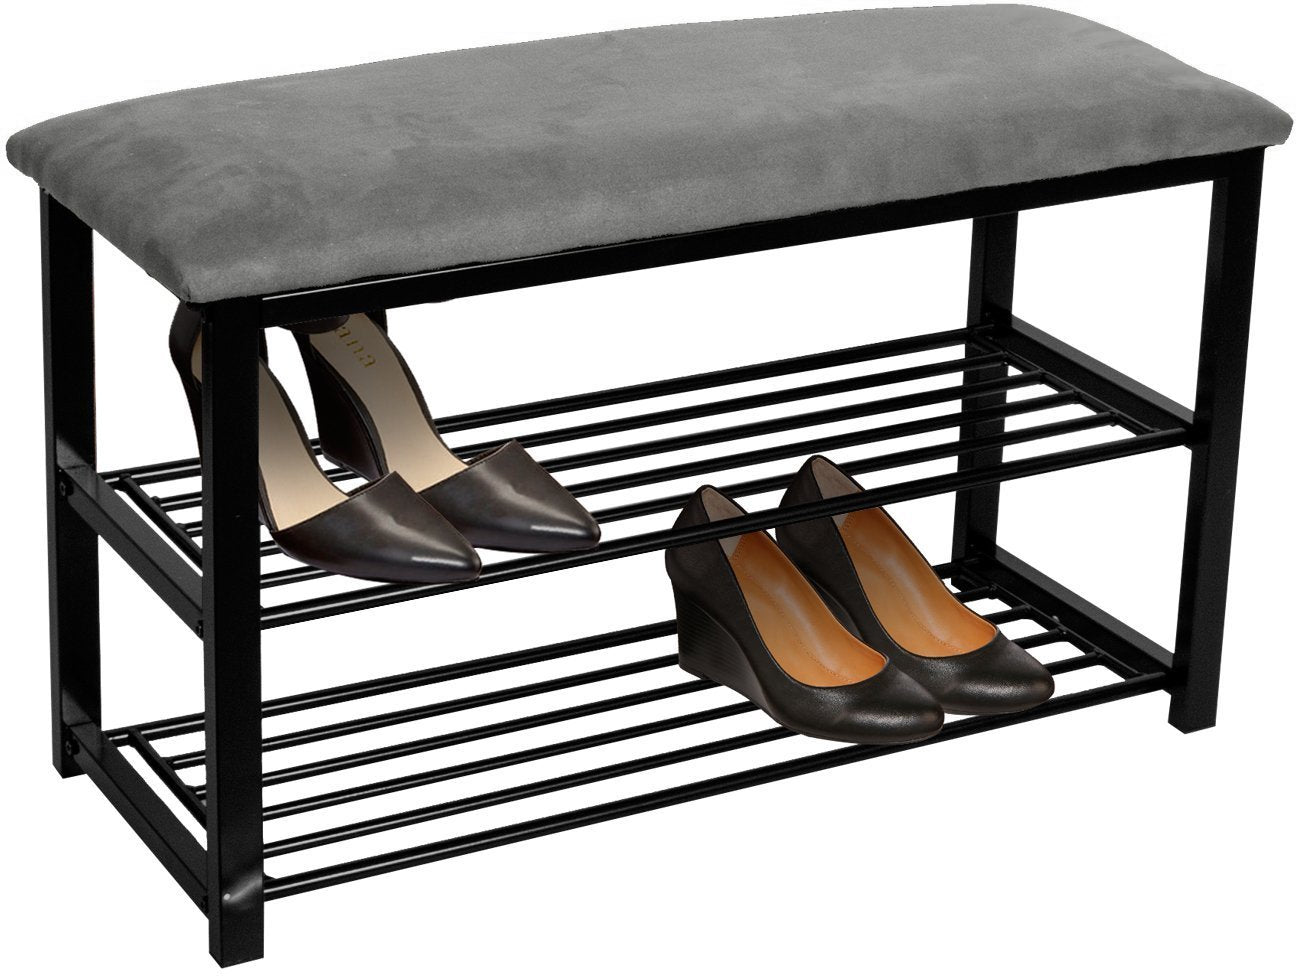 Sorbus Shoe Rack Bench – Shoes Racks Organizer – Perfect Bench Seat Storage for Hallway Entryway, Mudroom, Closet, Bedroom, etc (Gray)